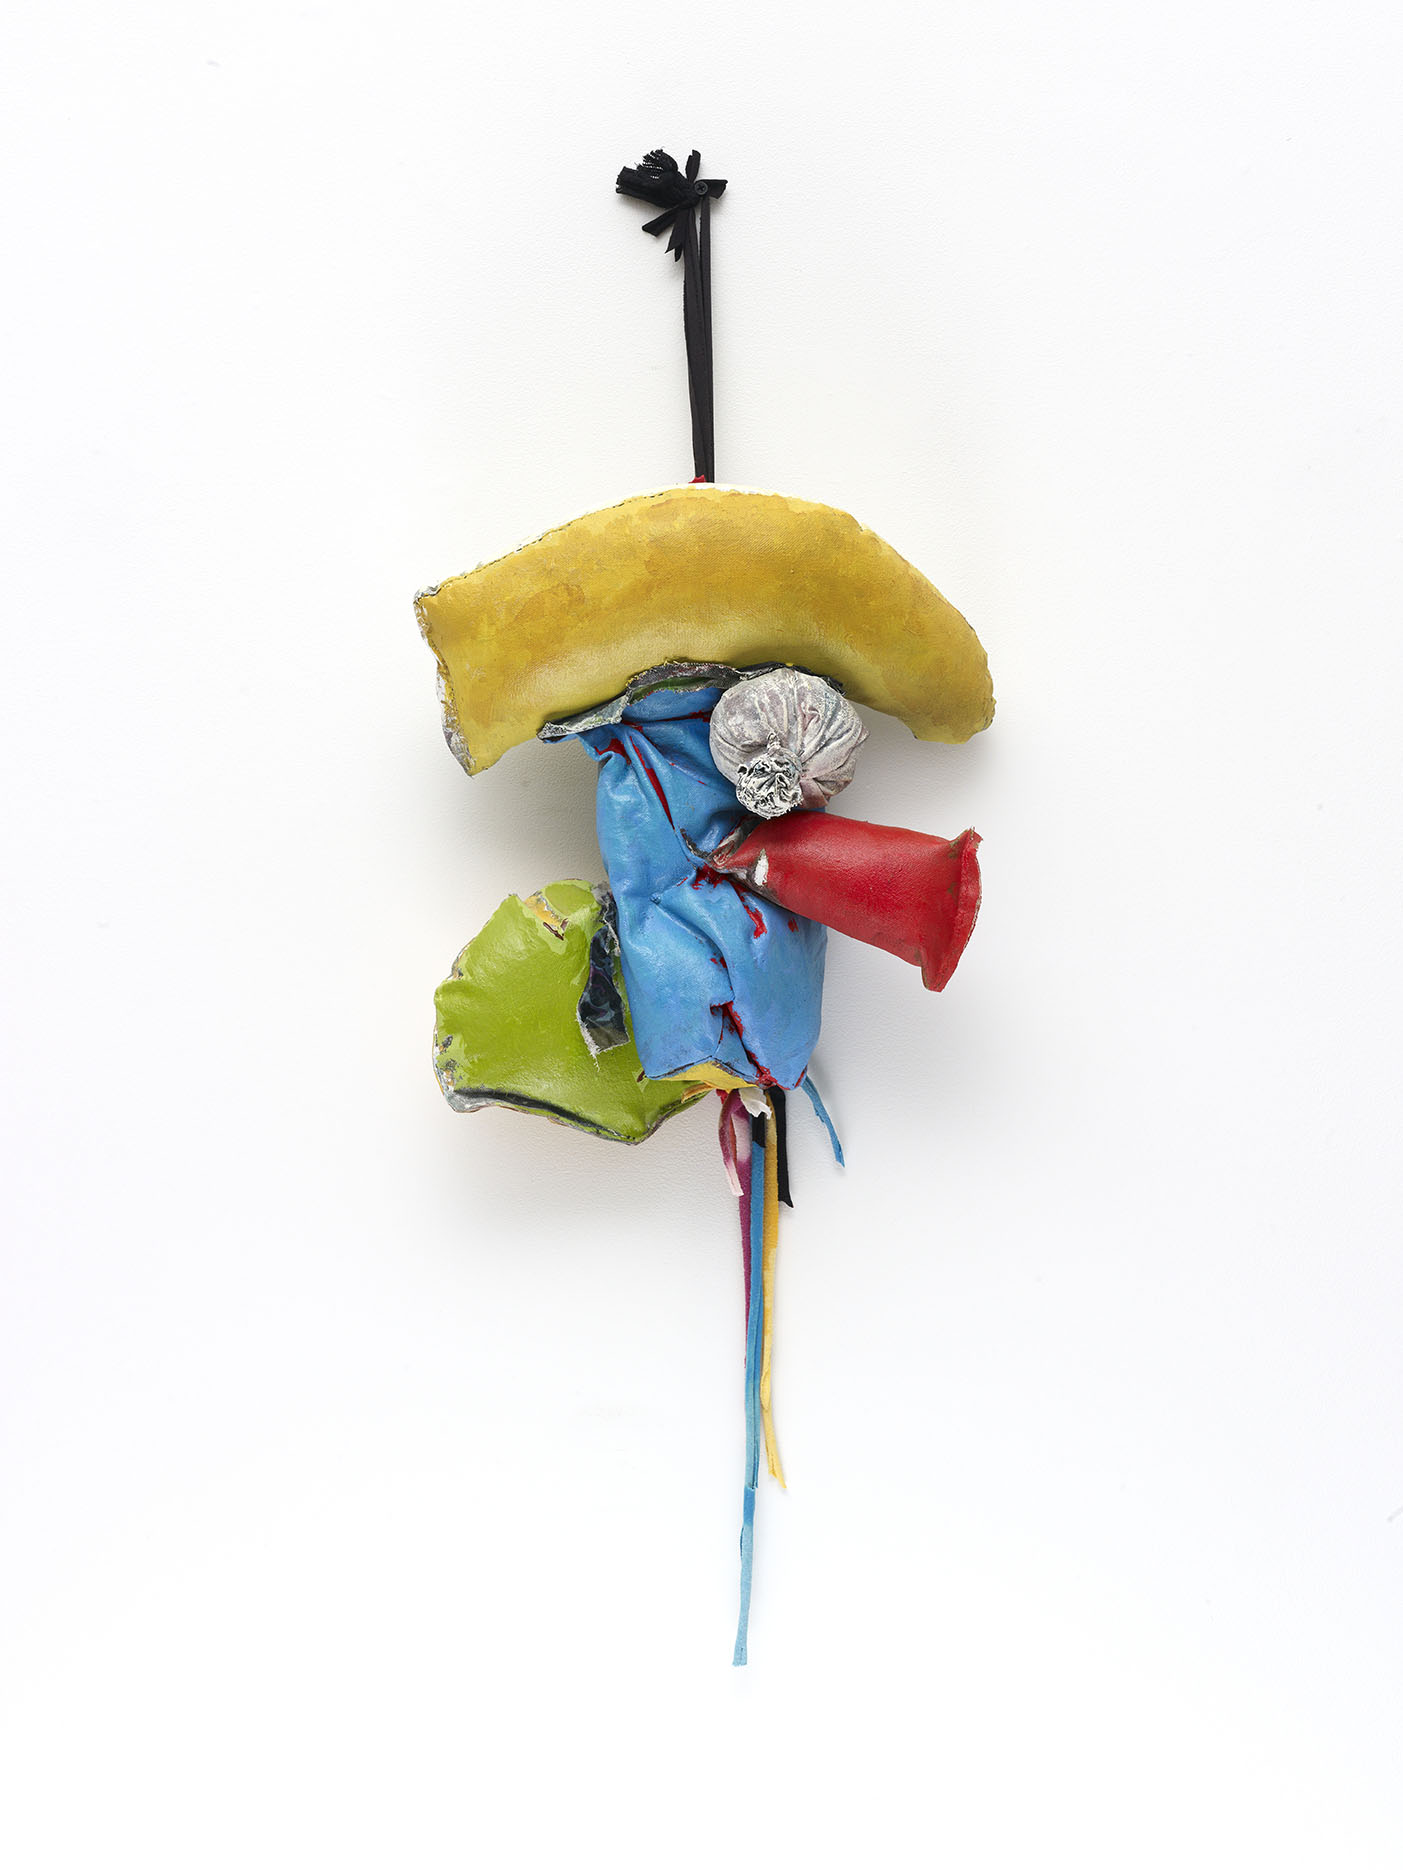 John Outterbridge, Rag and Bag Idiom III, 2012. Técnica mixta. 34 x 14 x 7 ½ pulgadas. Imagen cortesía de Tilton Gallery, Nueva York.